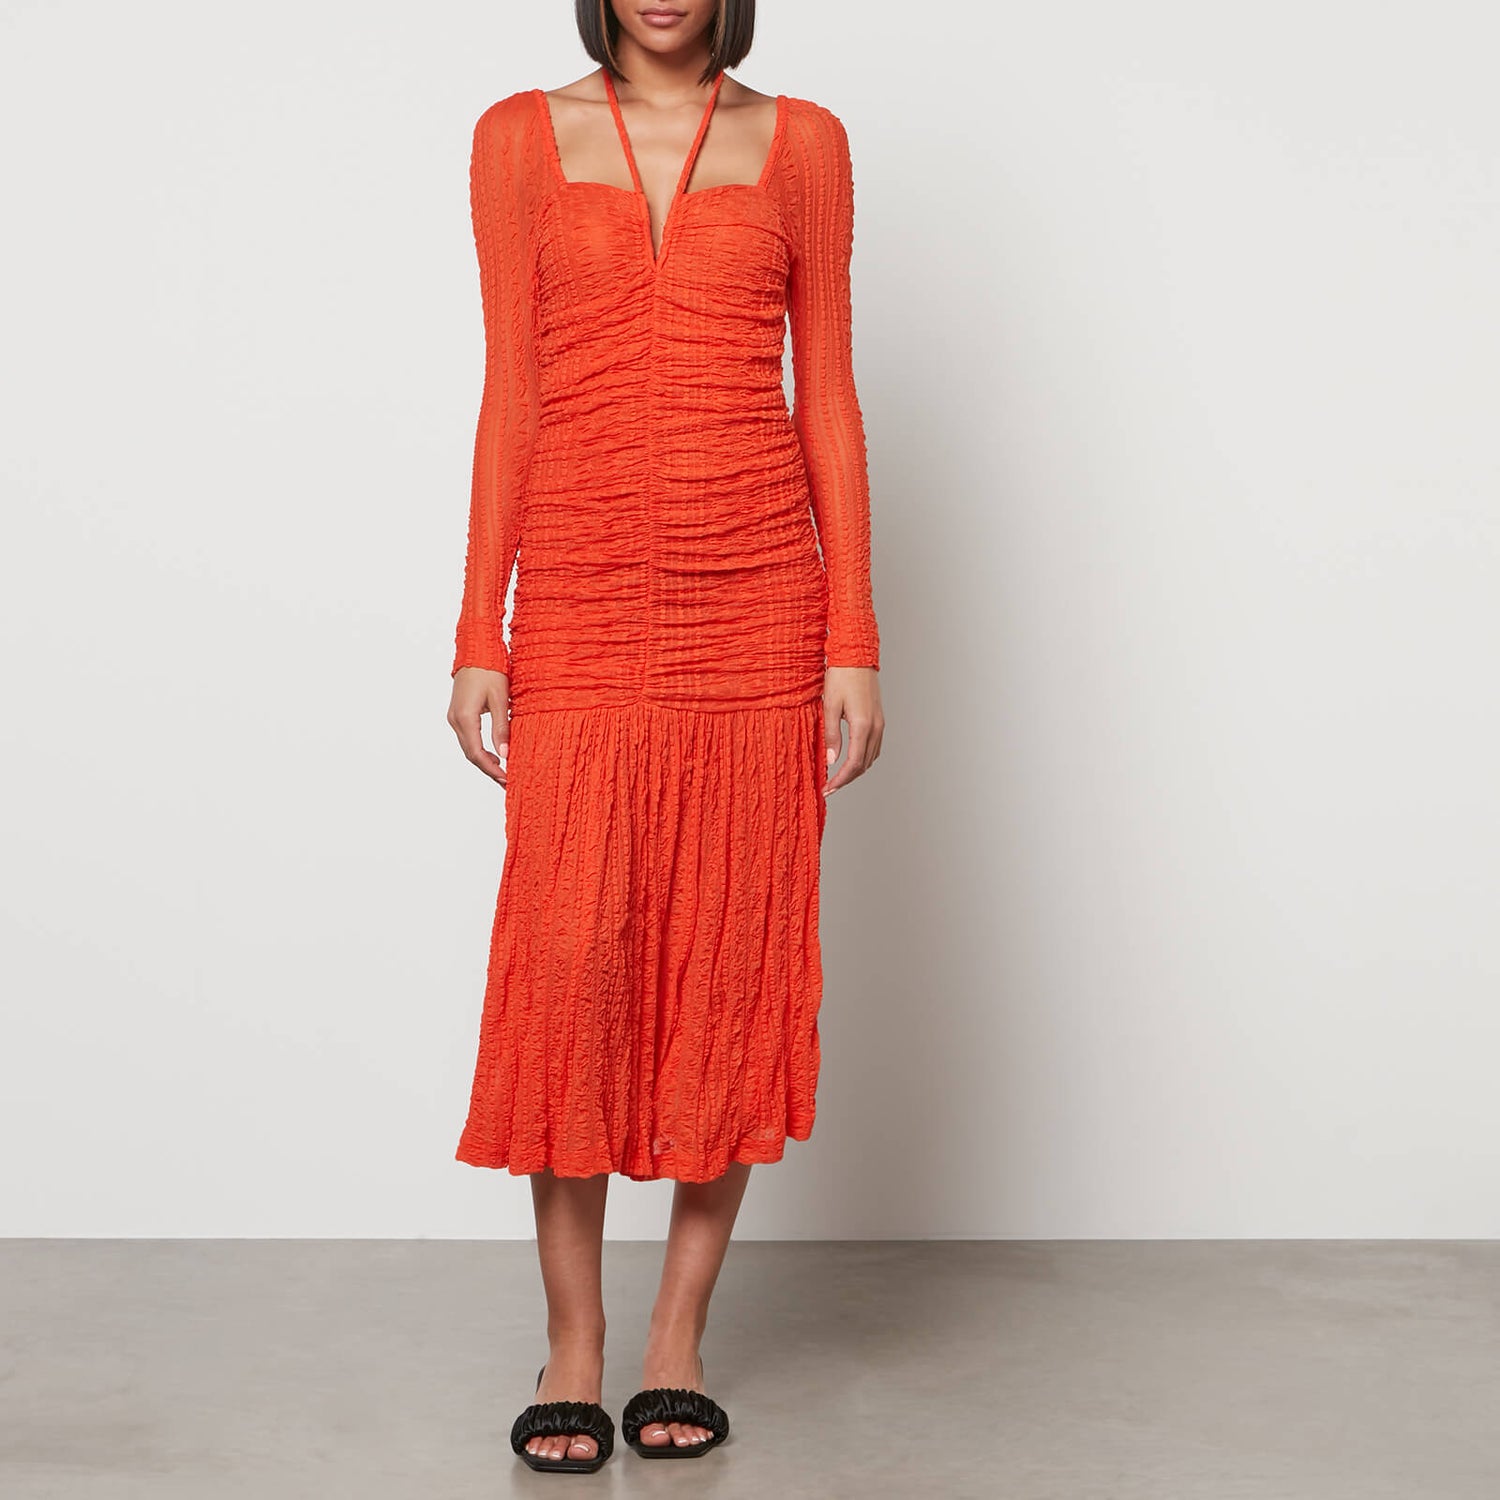 Ganni Women's Stretch Lace Jersey Dress - Orangedotcom - EU 36/UK 8